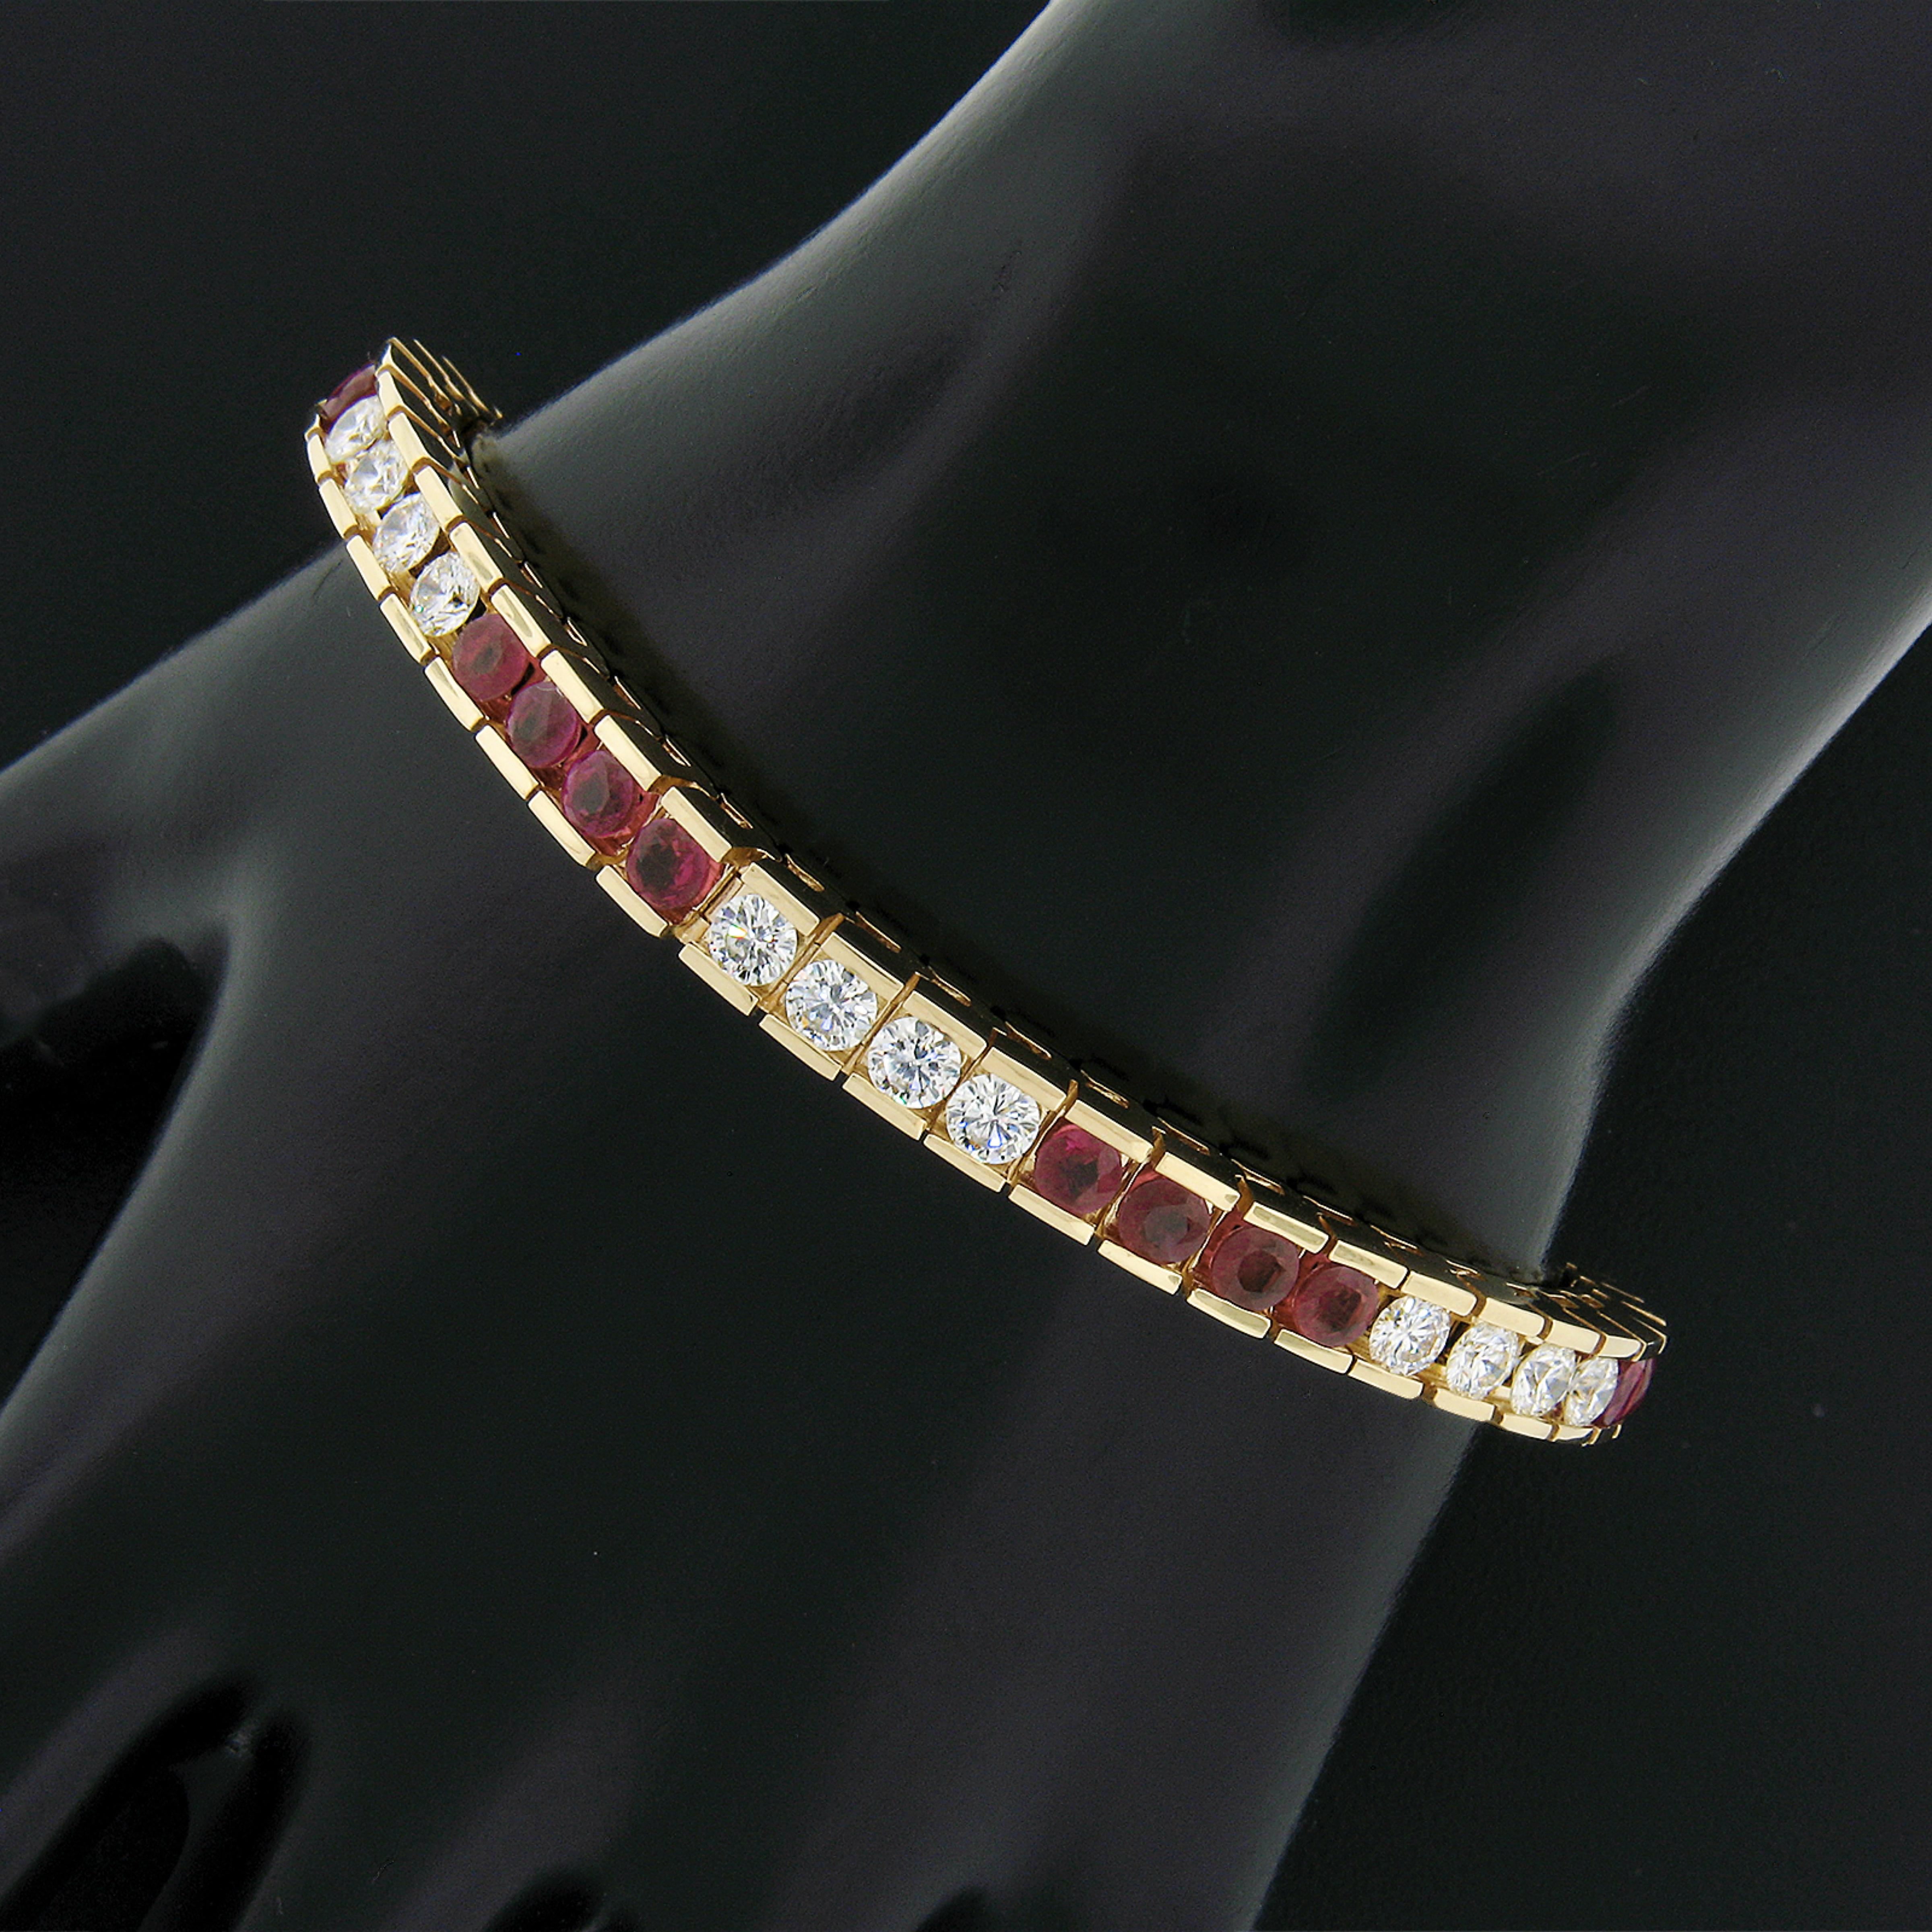 9.25ct 18ct rose gold tennis bracelet guaranteed g/h colour si purity natural diamonds